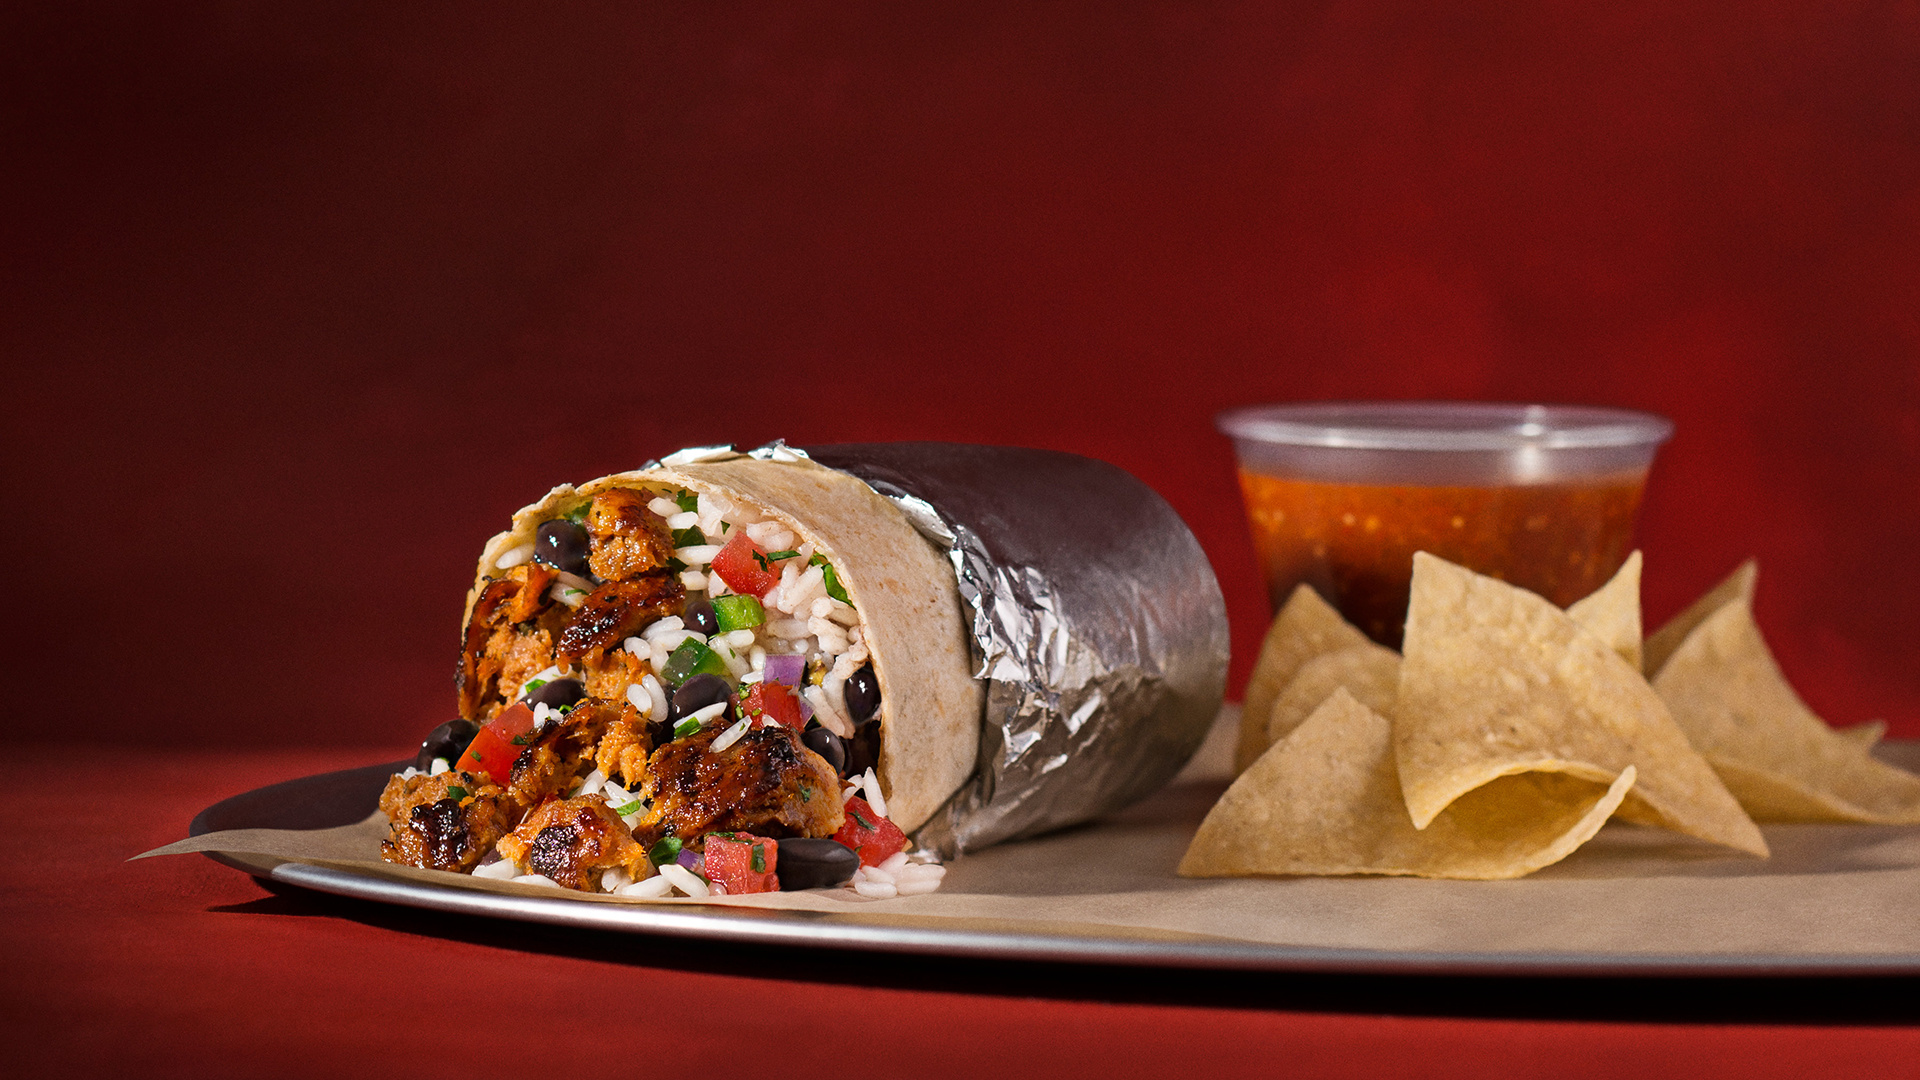 Chipotle: Fresh Mexican food restaurants, Burrito bowls, Tortilla chips. 1920x1080 Full HD Wallpaper.